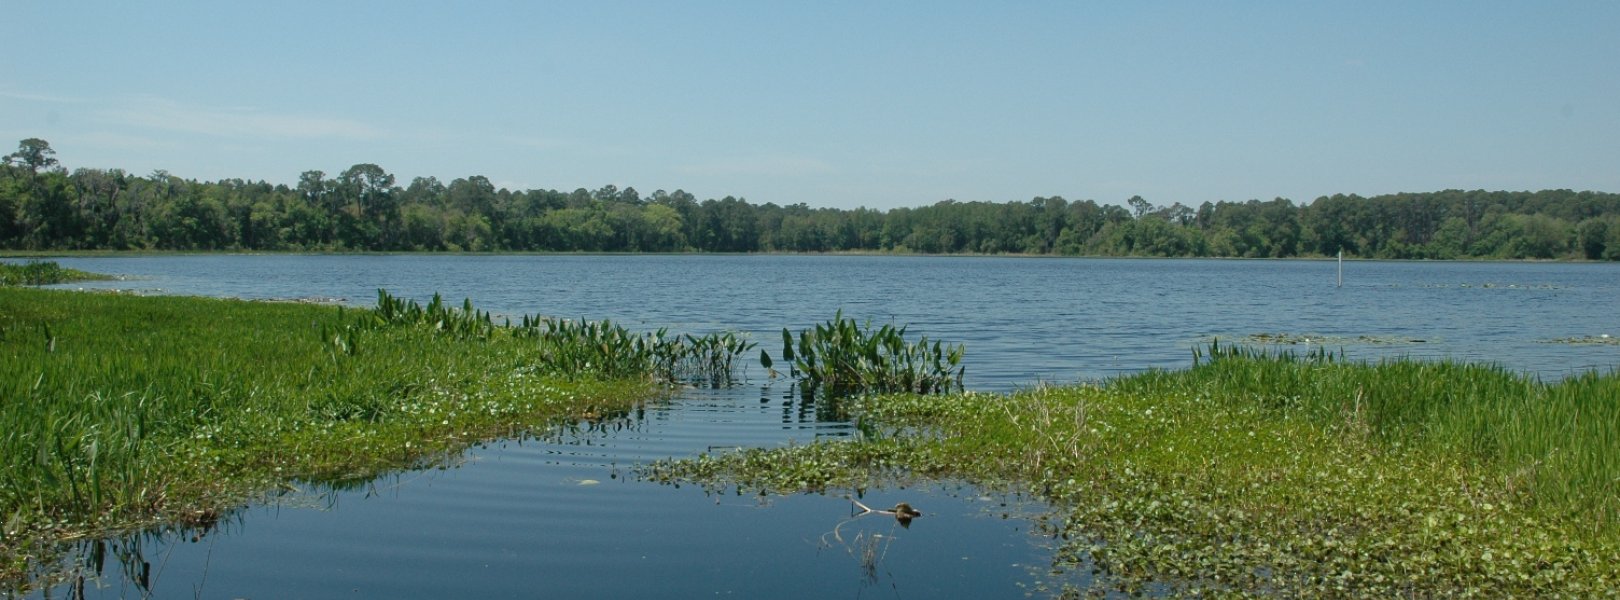 SUGG lake site in Domain 03